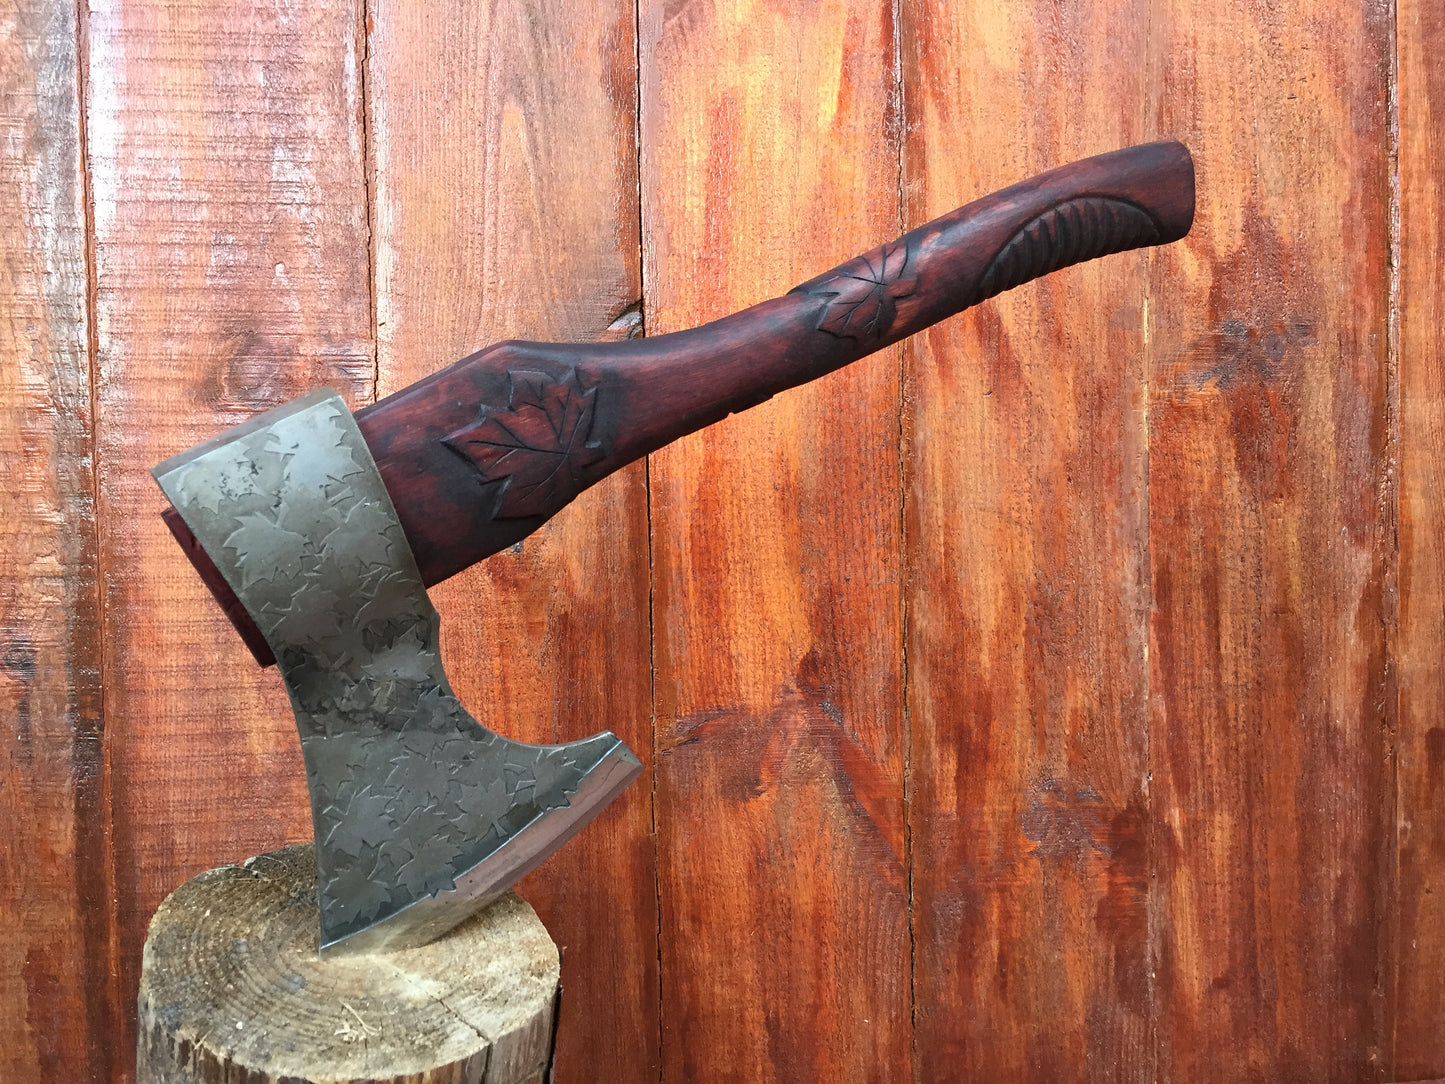 Mens gift, 6th anniversary gift, viking axe, tomahawk, hatchet, medieval axe, iron anniversary, handyman gift, handy manly, gift to groom